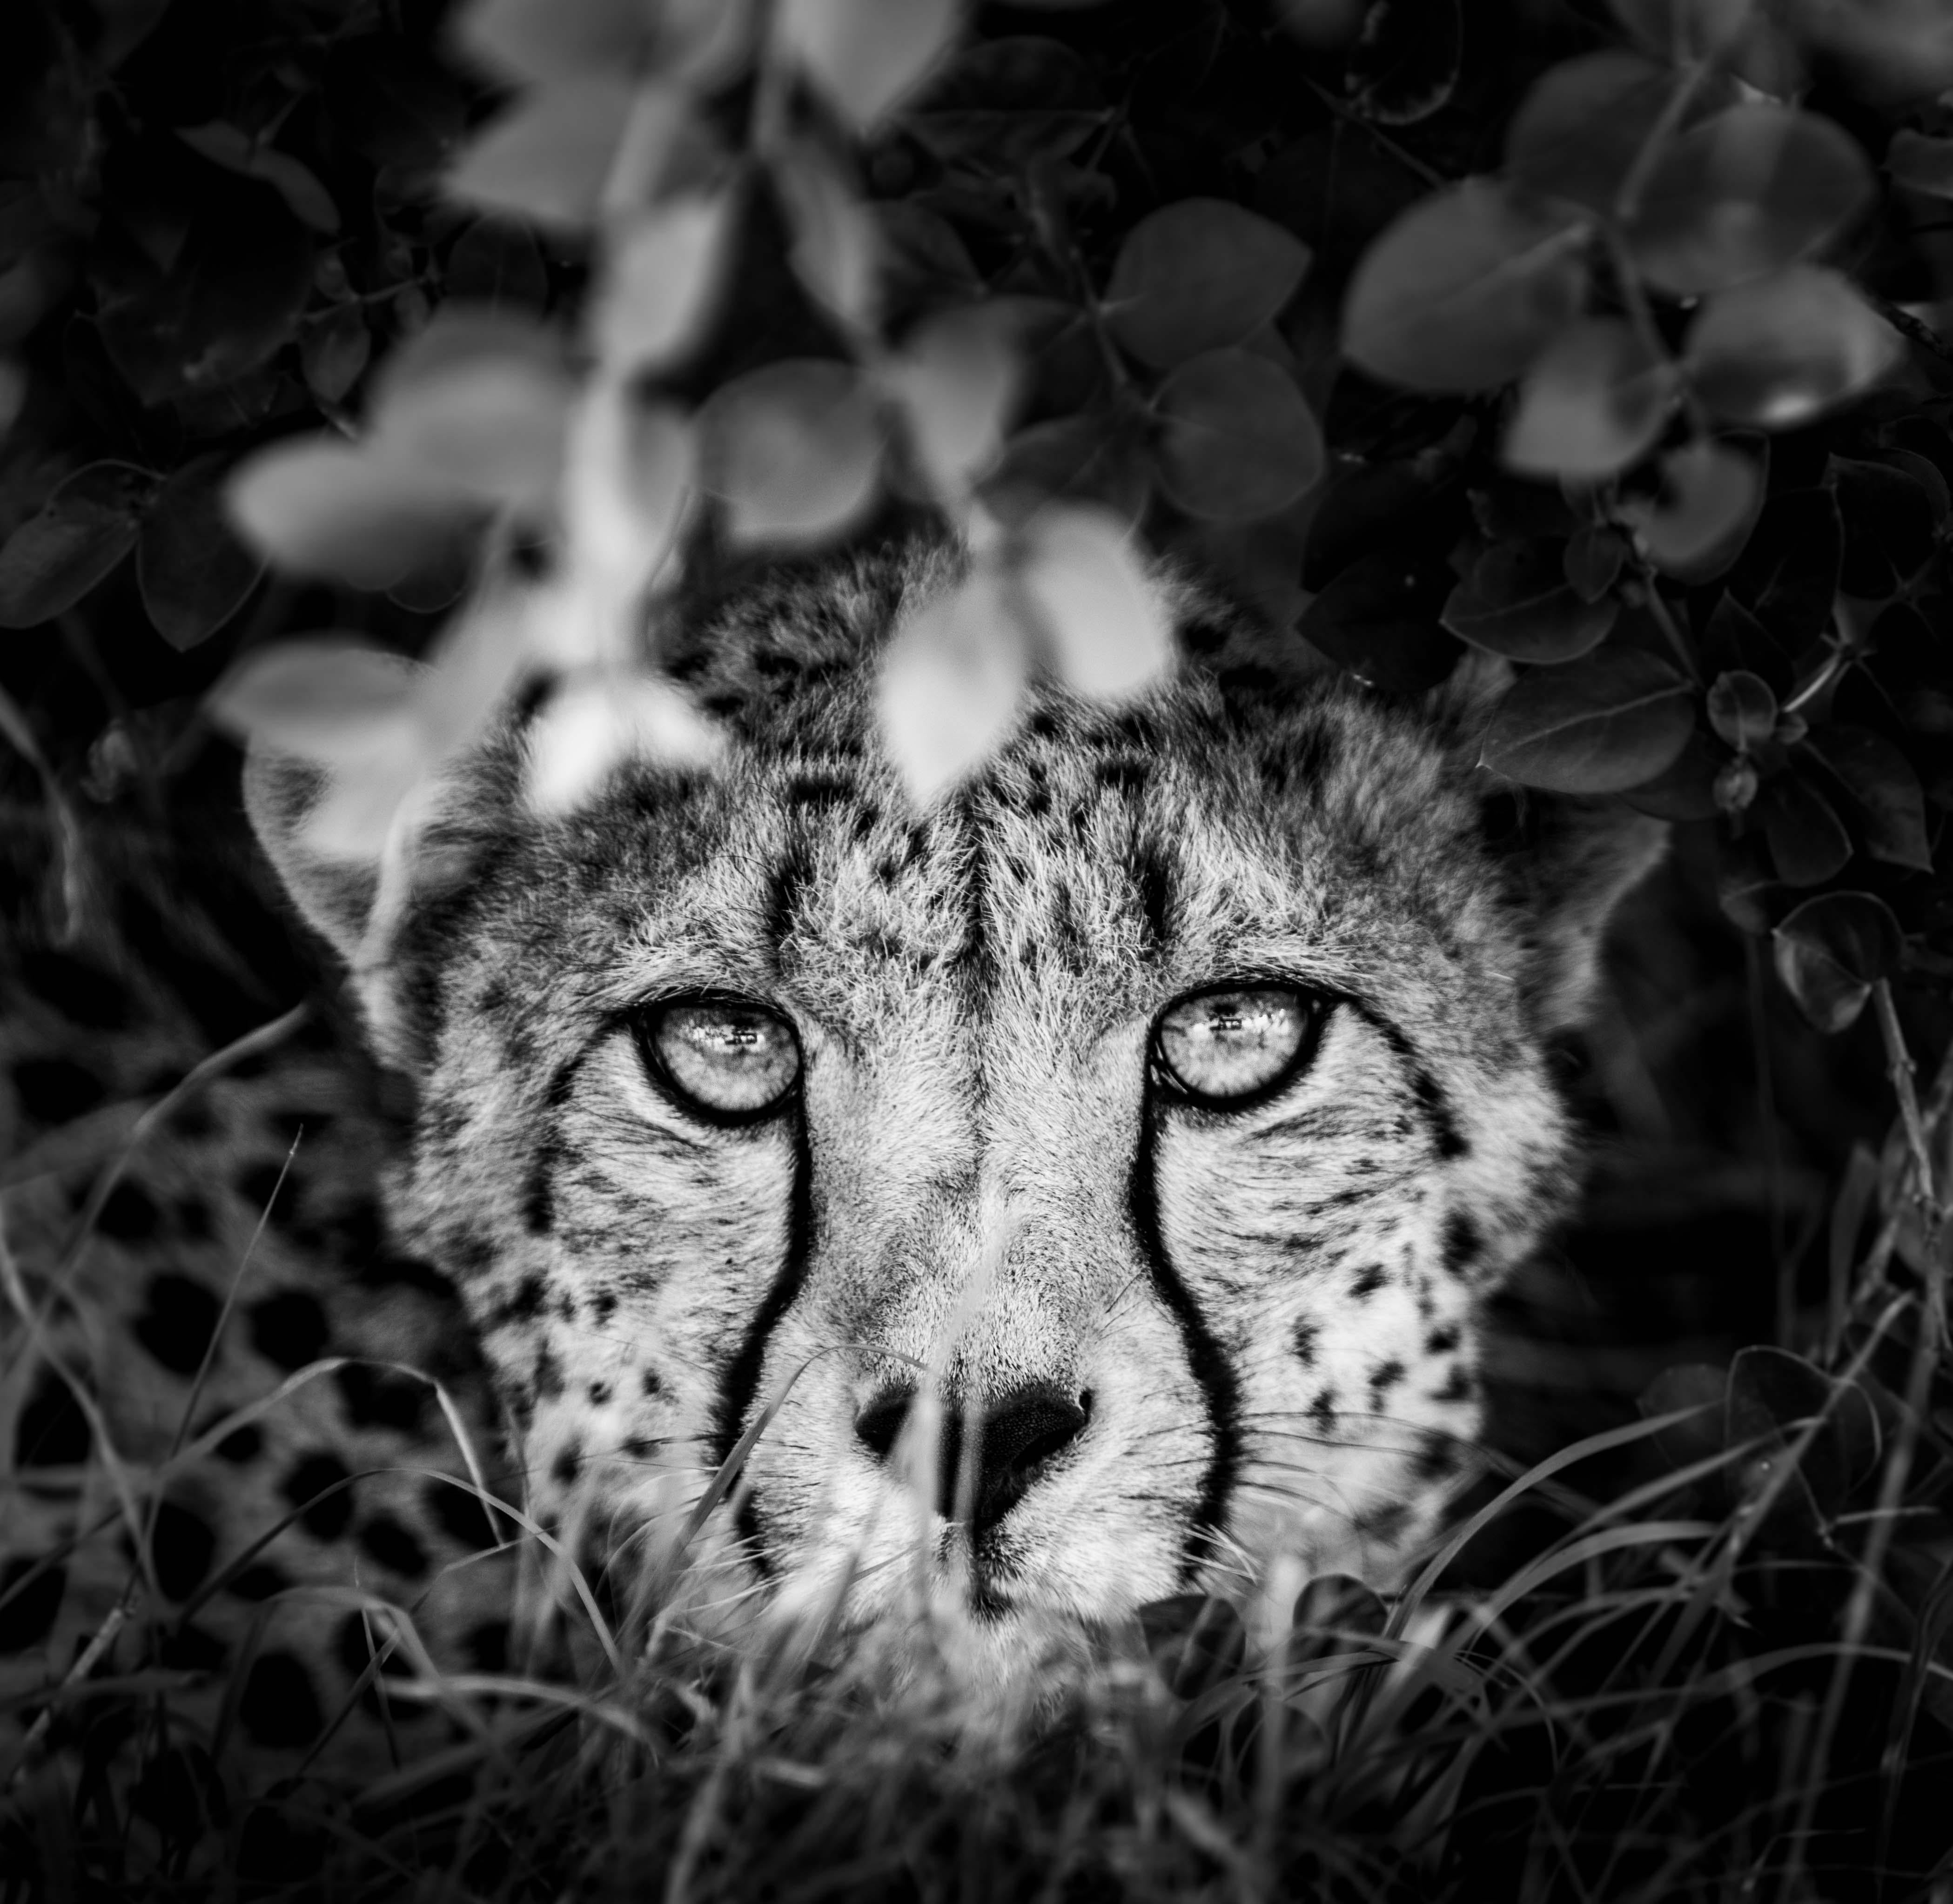 James Lewin Black and White Photograph - The Cheetah and I, Borana, Kenya. (18" x 18.46")